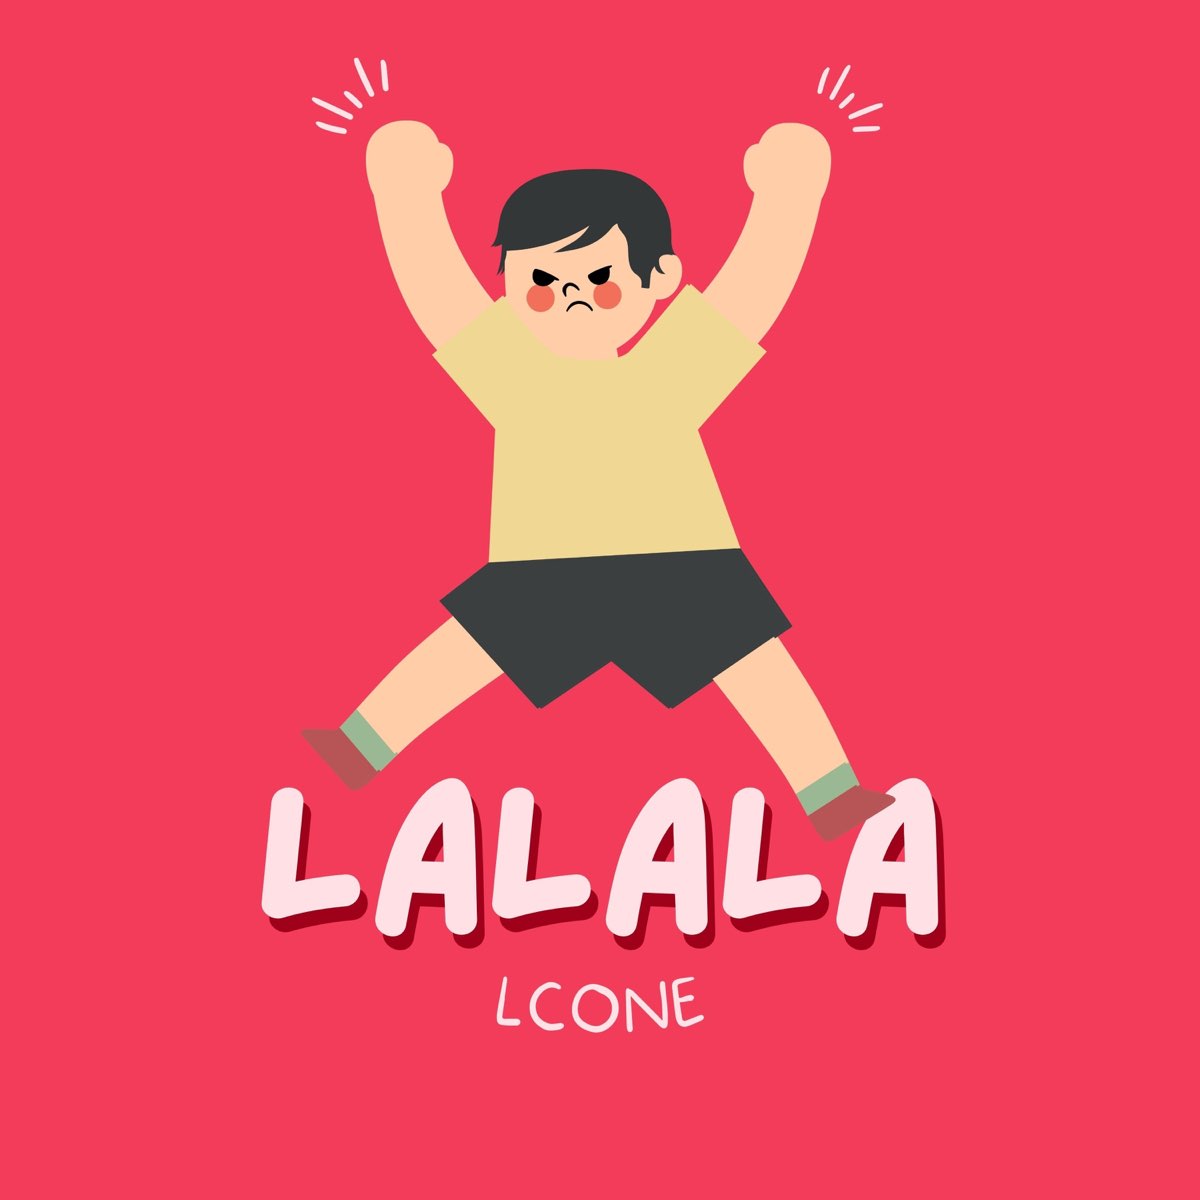 Lalala. Lalala okokok ава. Lalala okokok стили. Lalala logo. Around lalala